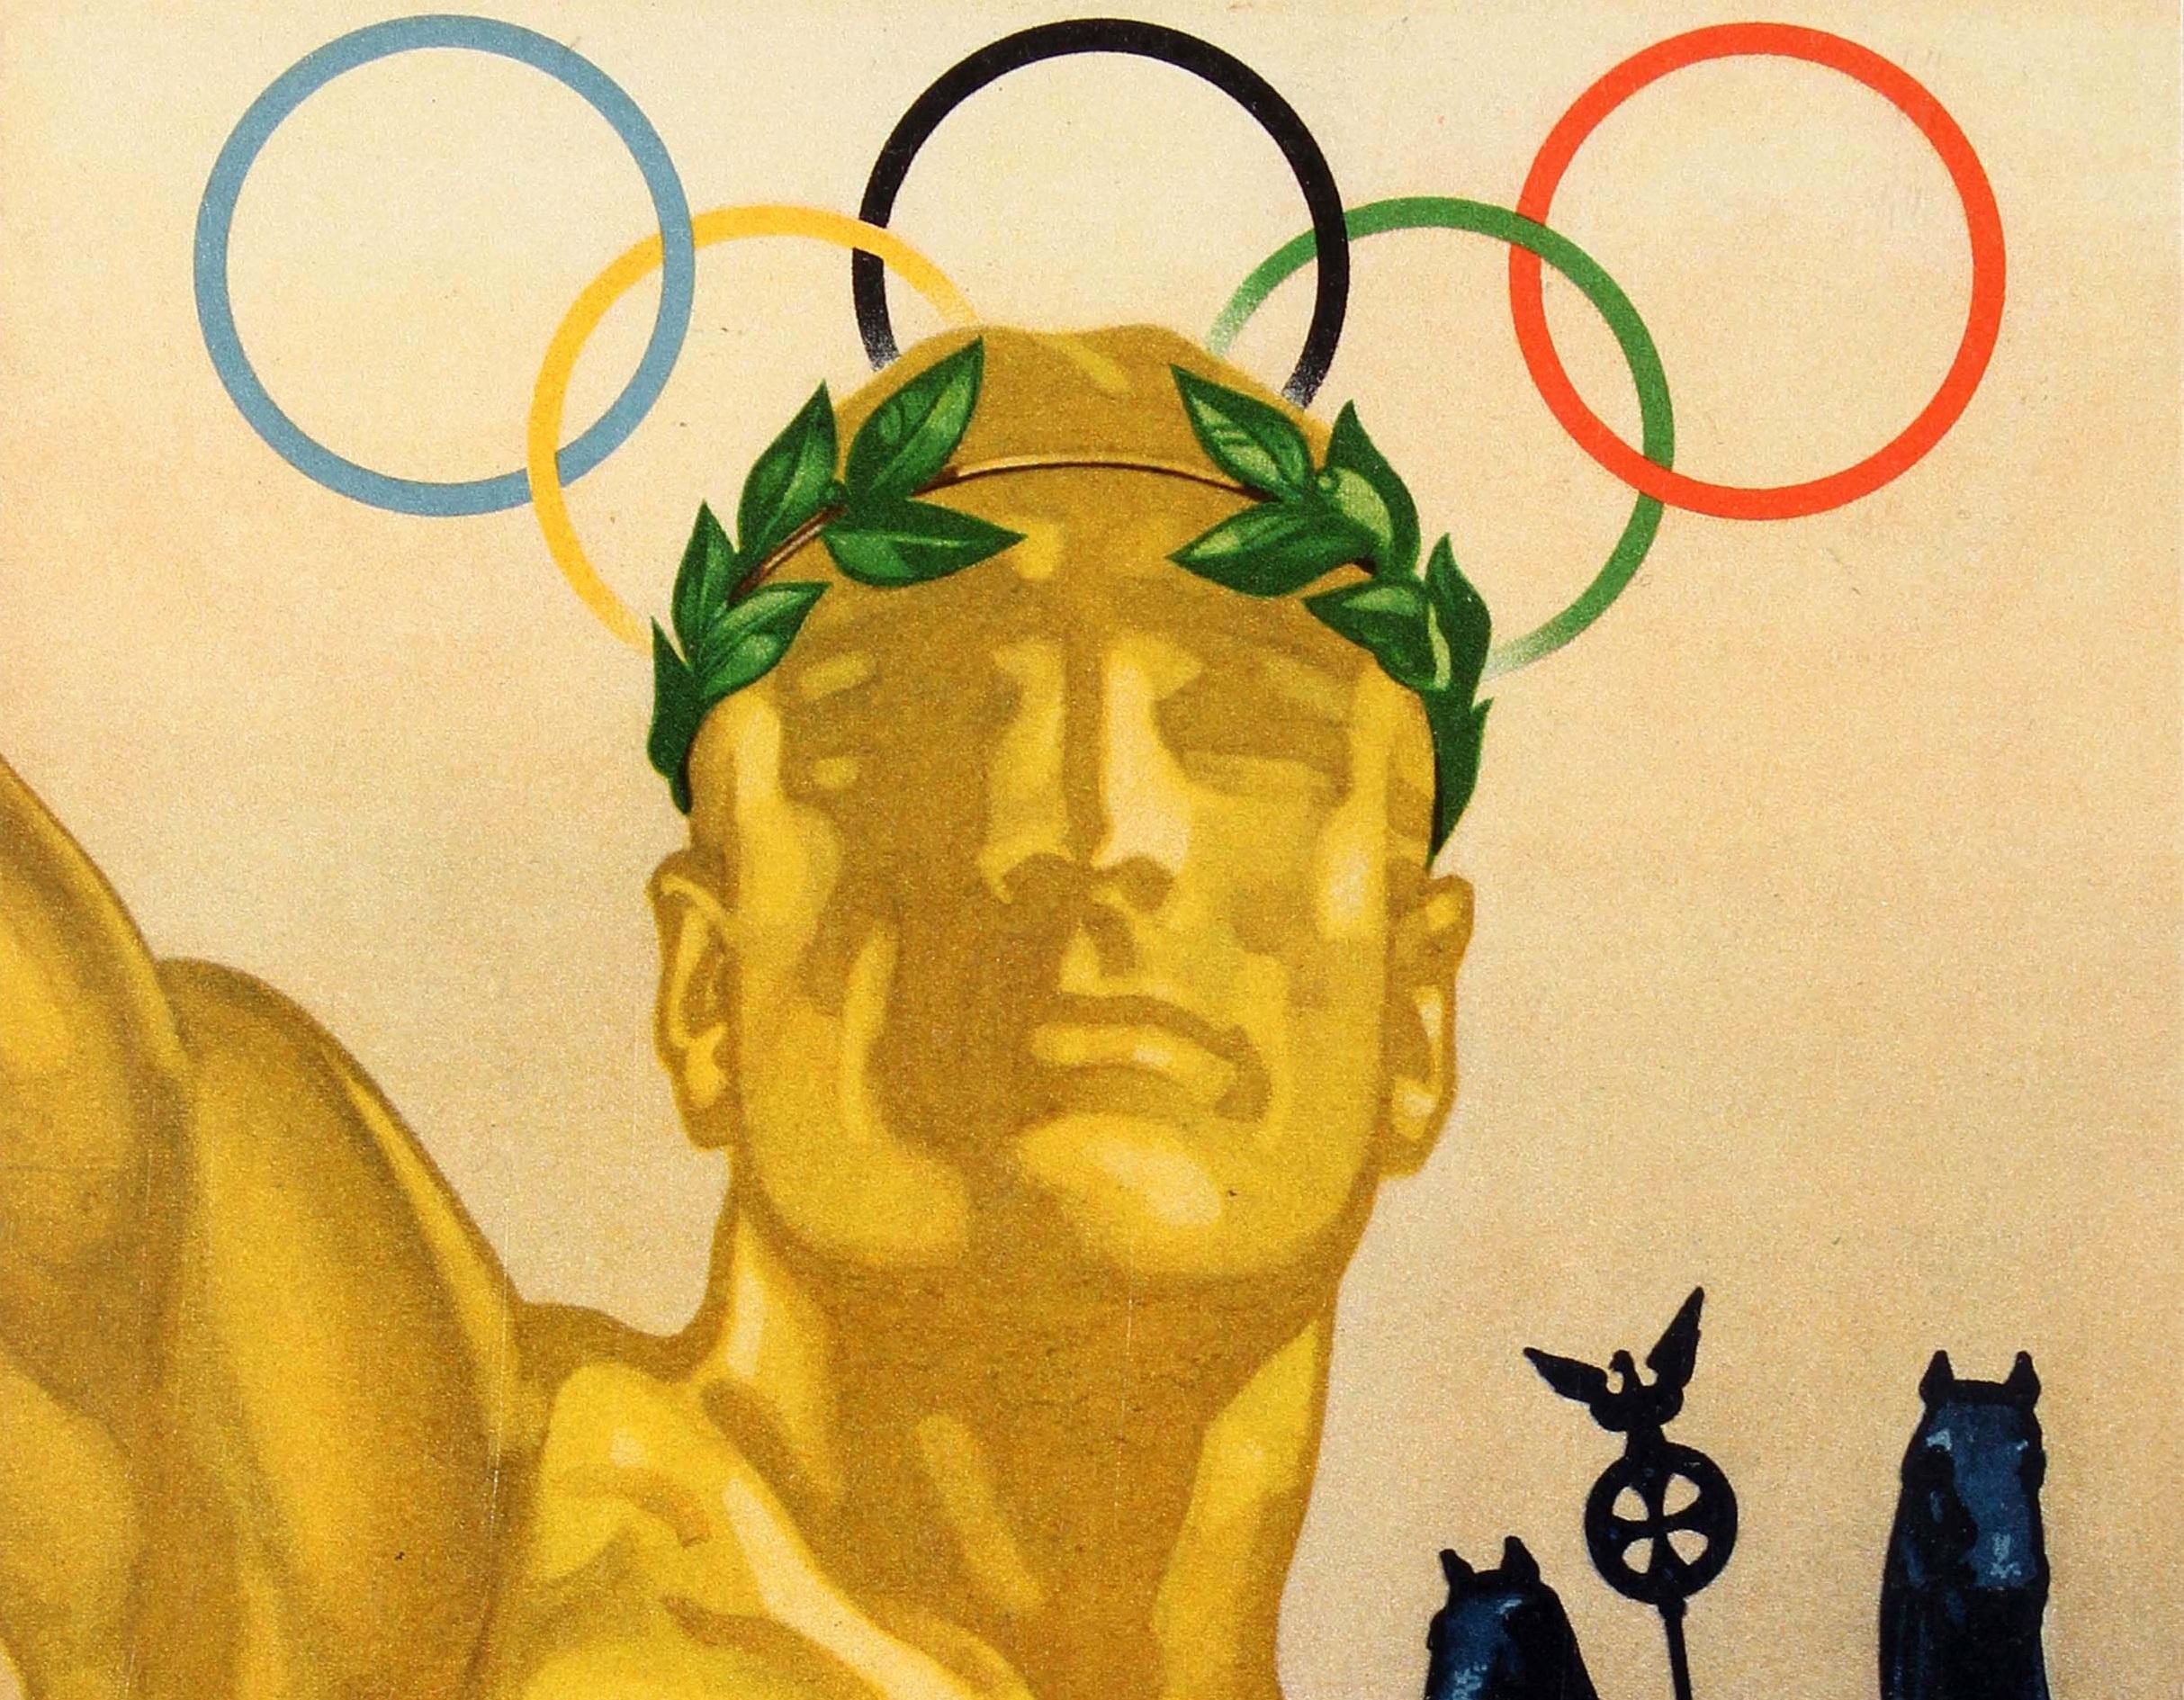 Original Vintage Summer Olympics Sport Poster 1936 Olympic Games Berlin Germany - Print by Franz Würbel